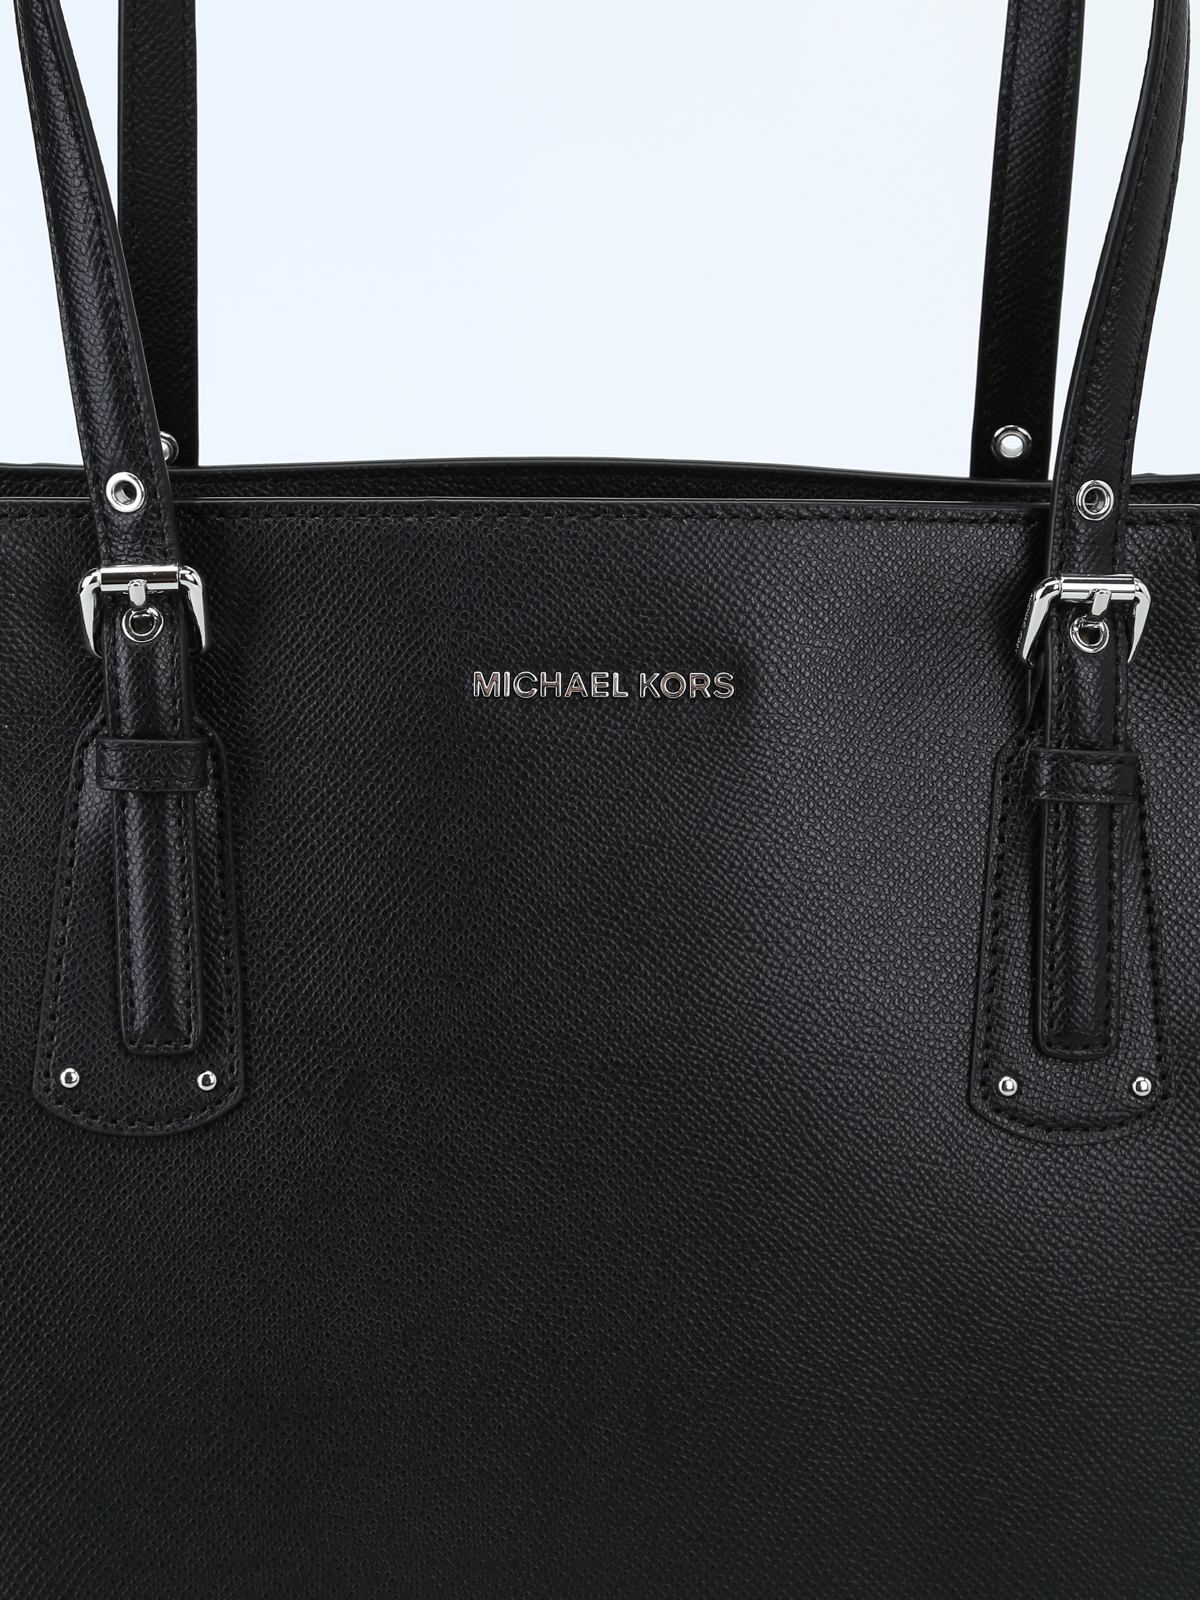 MICHAEL KORS Williamsburg Extra-Small Pebbled Leather Crossbody Bag - Black